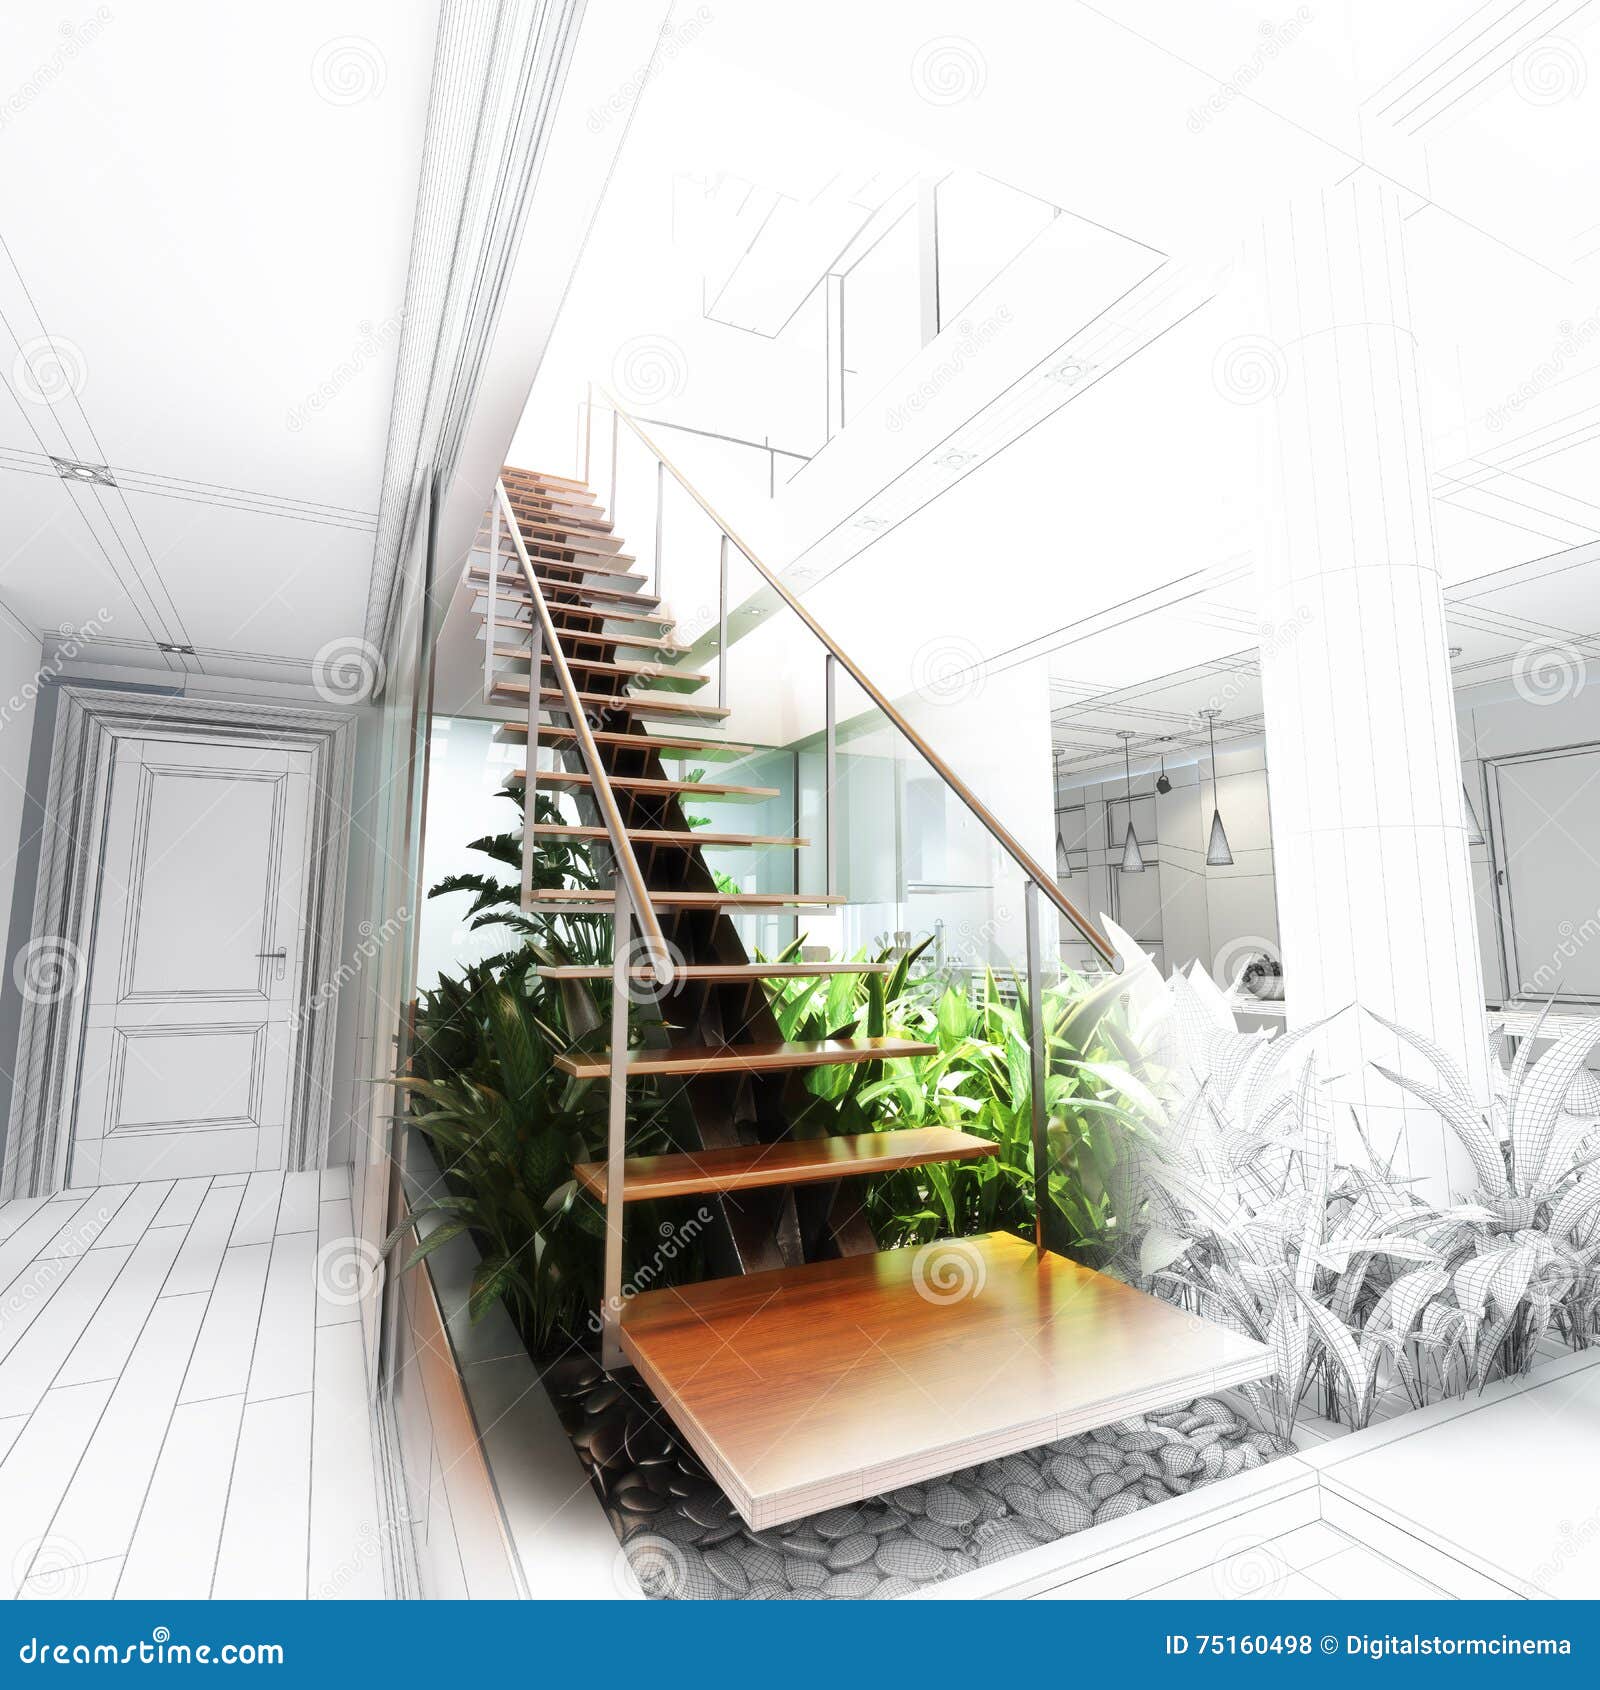 Advanced rendering will make your room look slick and elegant | Home design  floor plans, Free kitchen design, Interior design layout